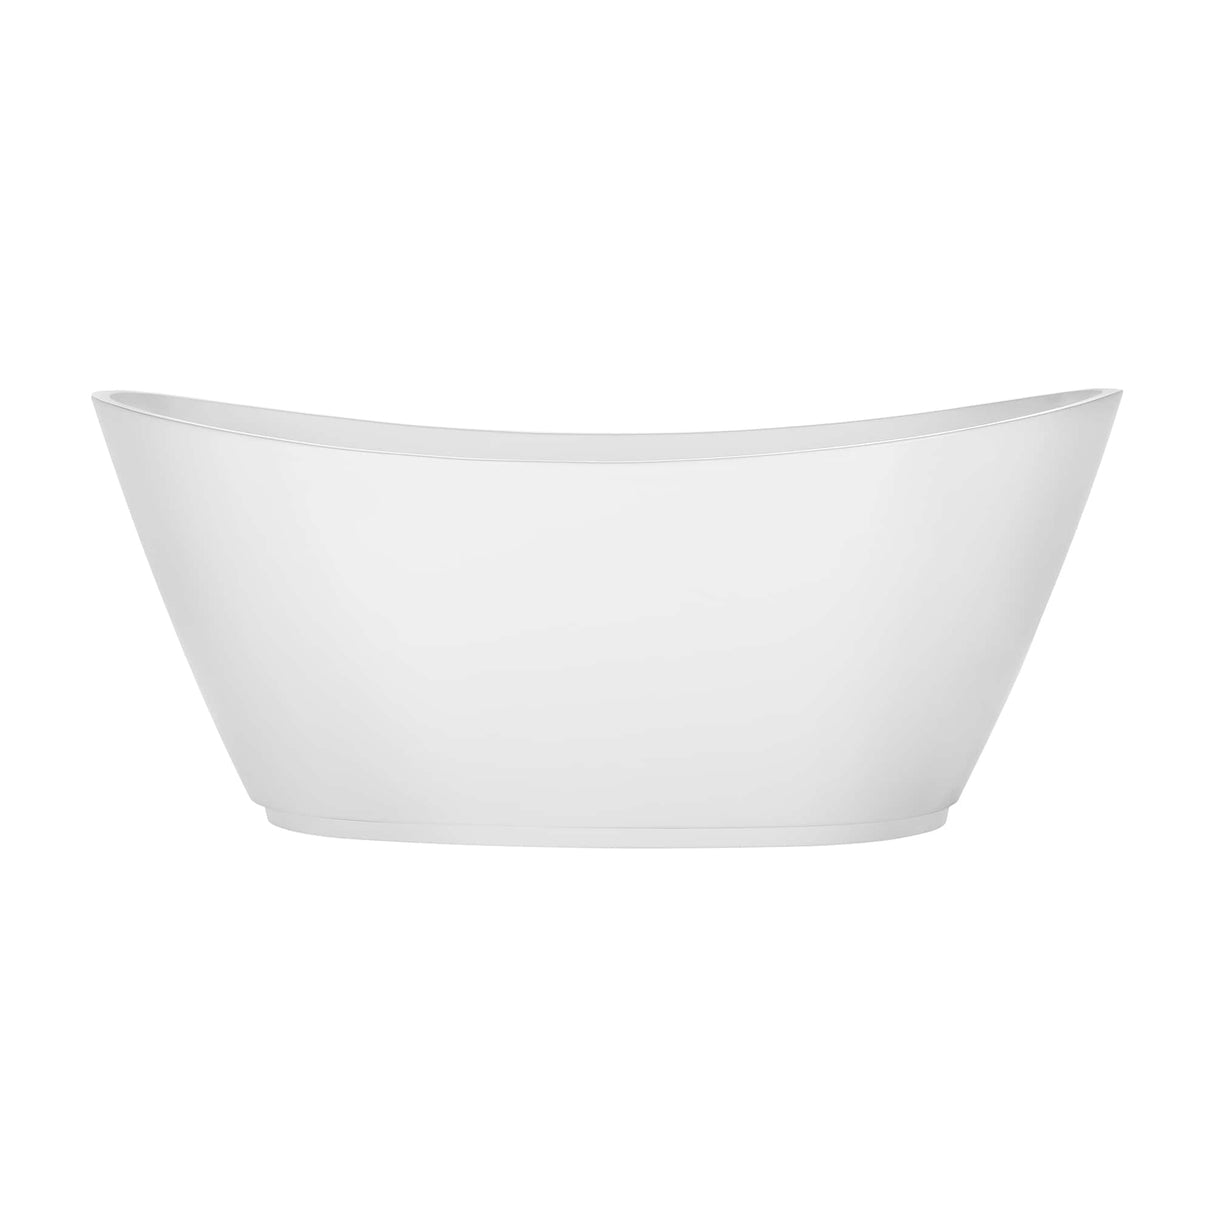 Empava-69FT1603 luxury freestanding acrylic soaking oval modern white SPA double-ended bathtub